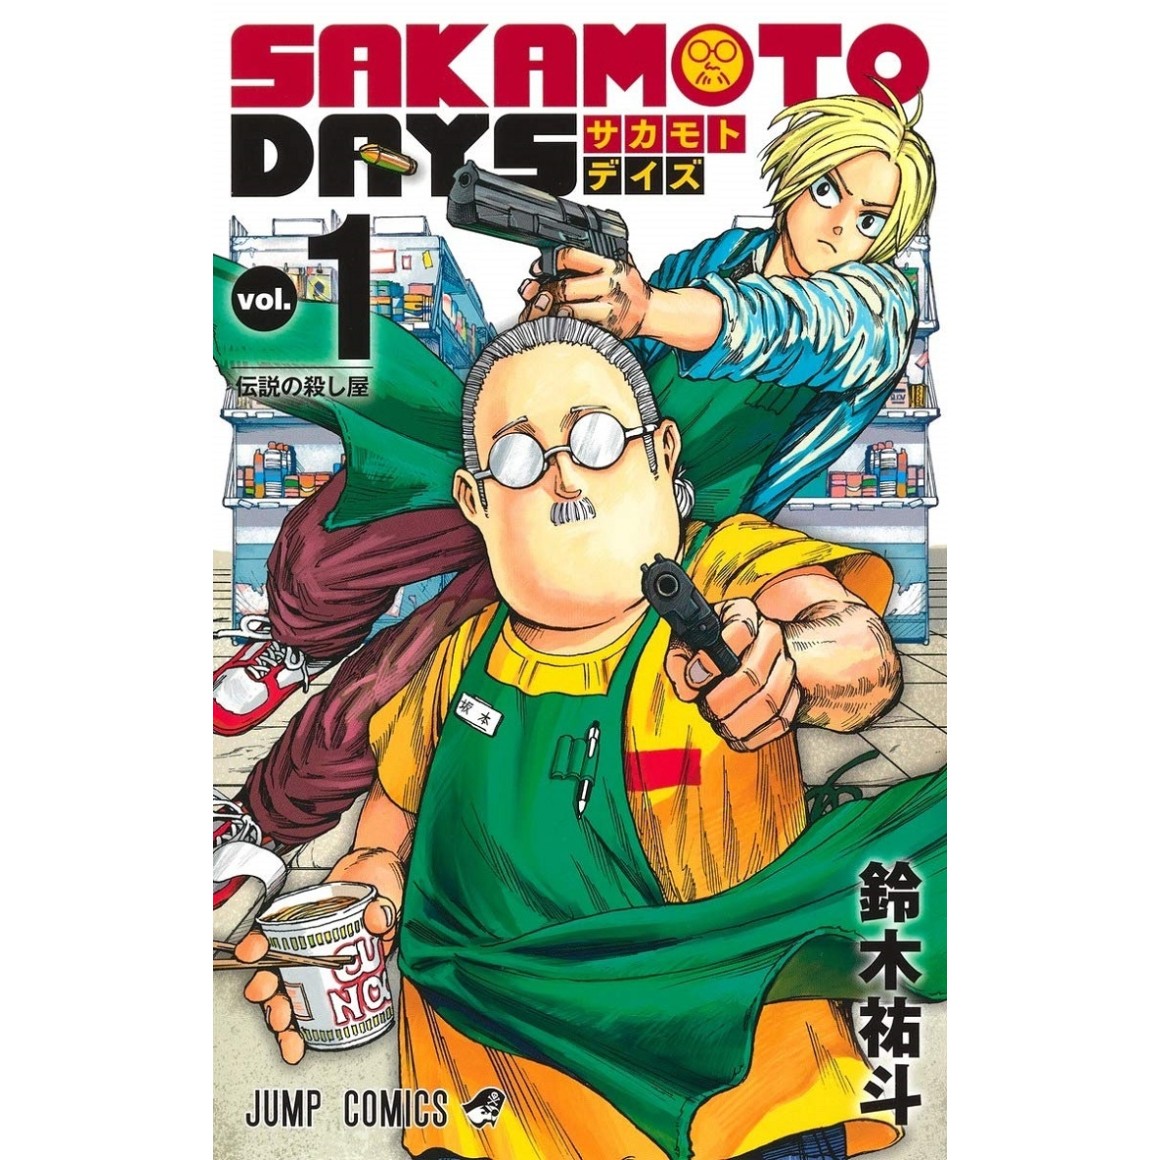 Sakamoto Days, Vol. 11, Book by Yuto Suzuki